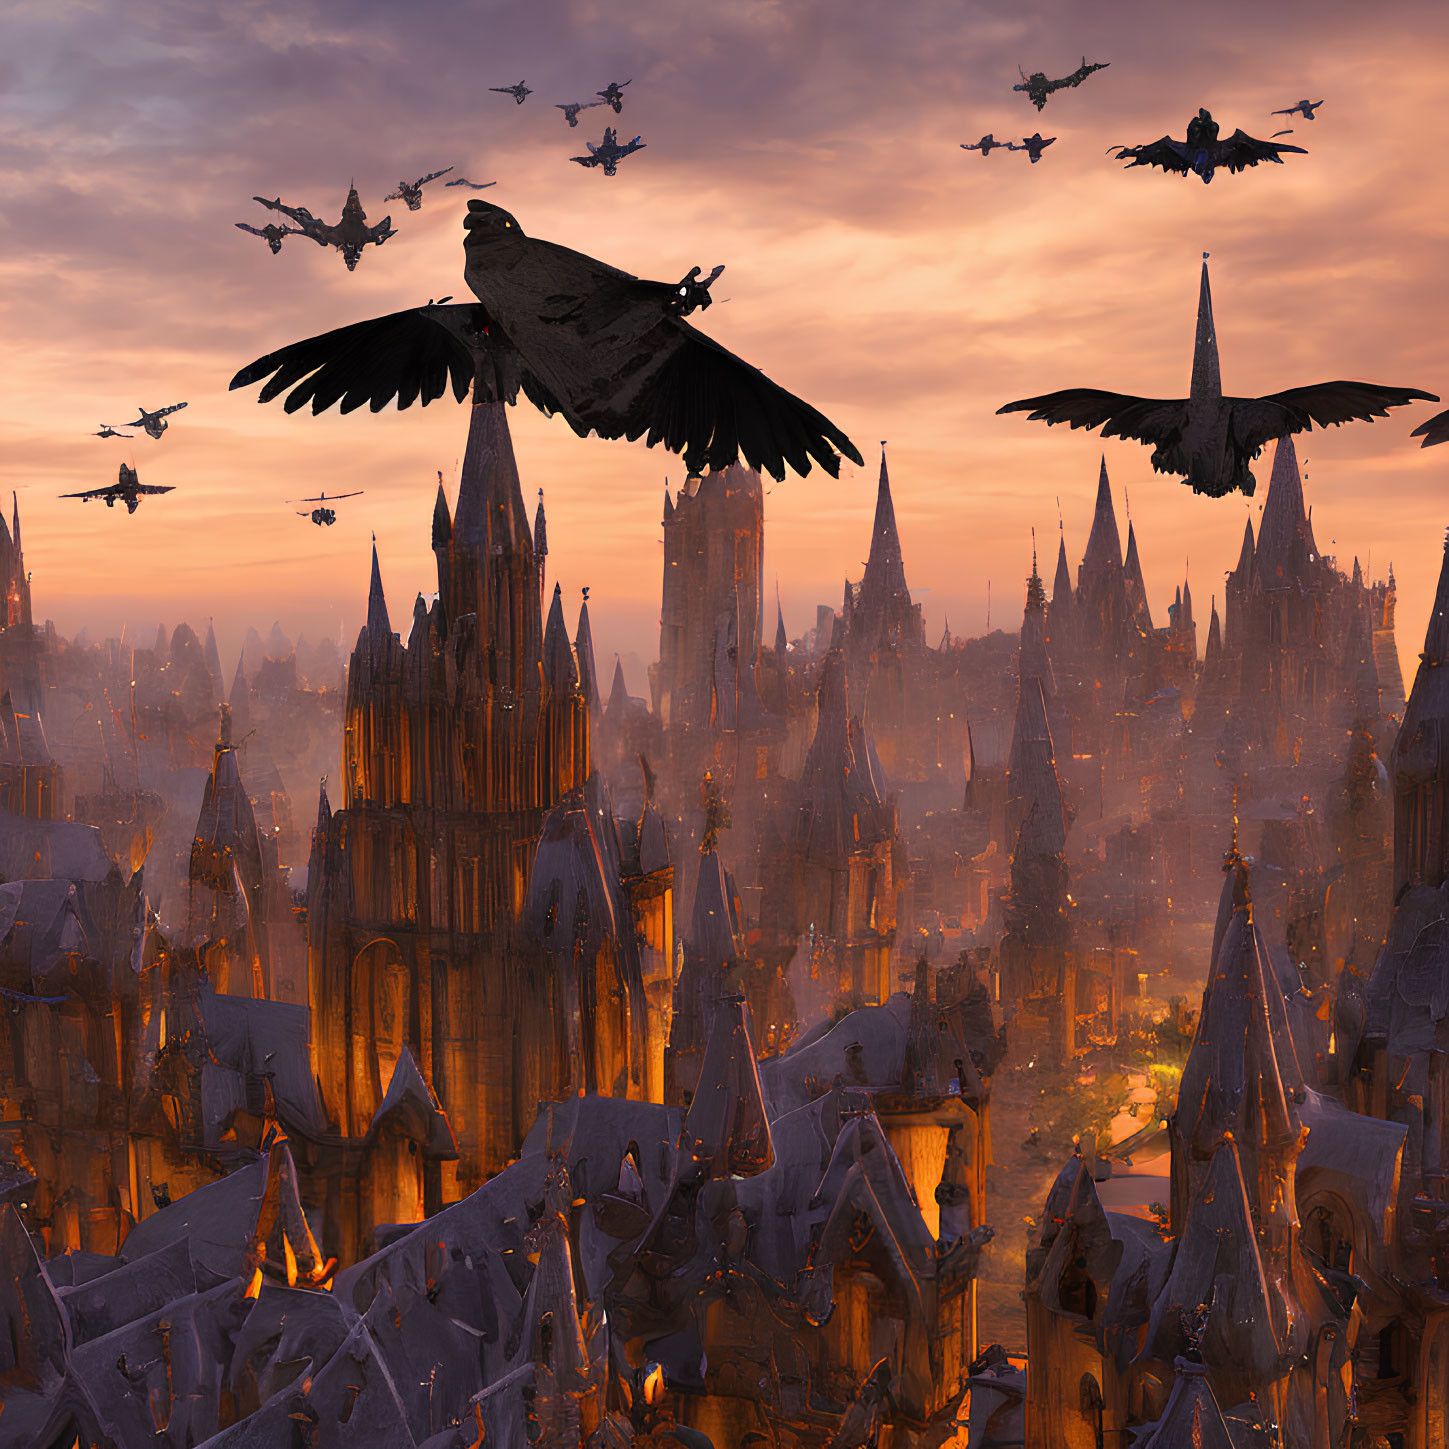 Flock of birds flying over gothic cityscape at dusk